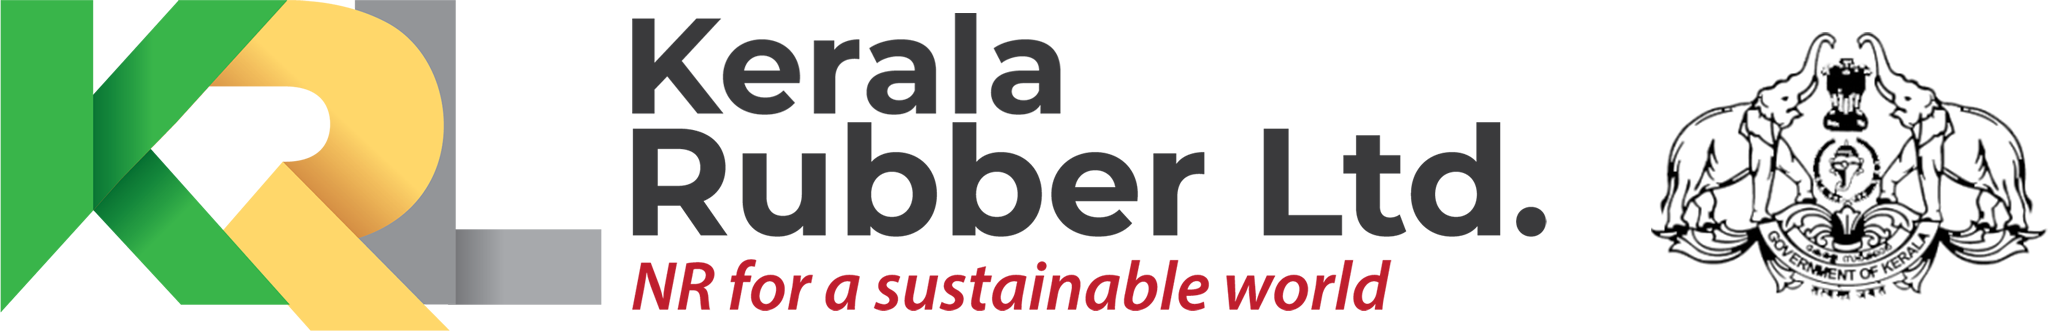 Kerala Rubber Ltd.